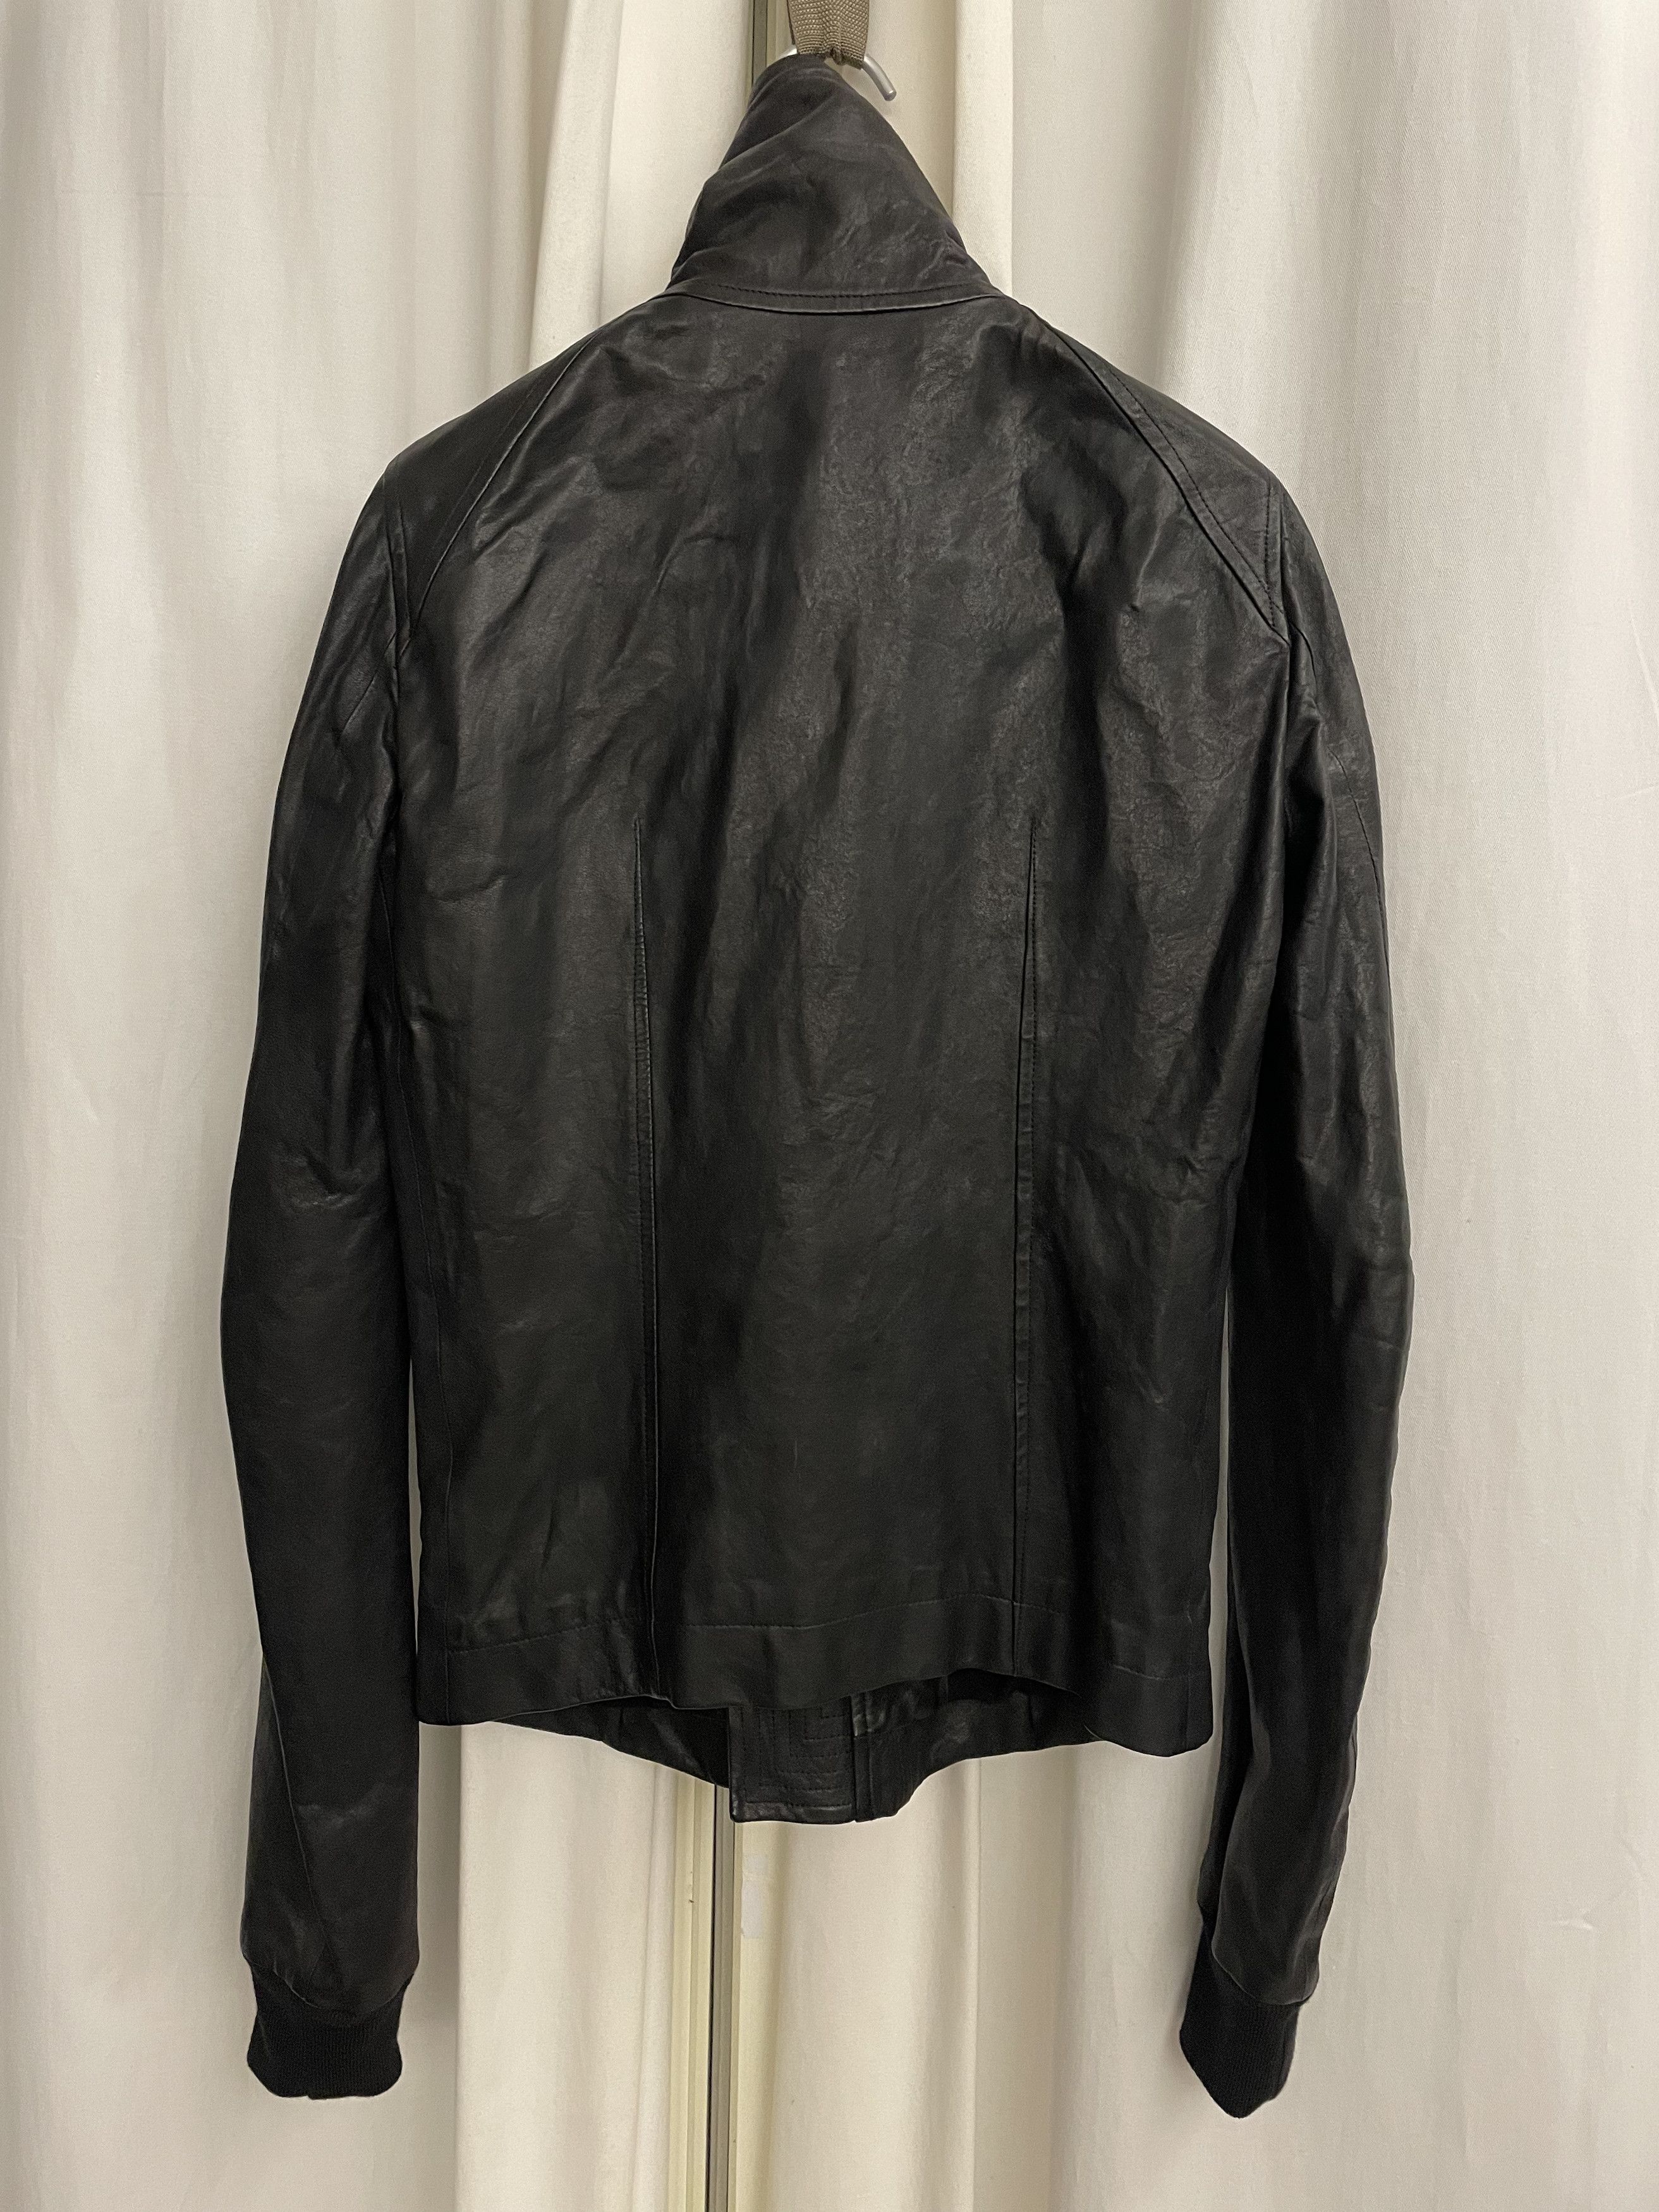 Rick Owens Lamb leather Intarsia jacket 46 | Grailed